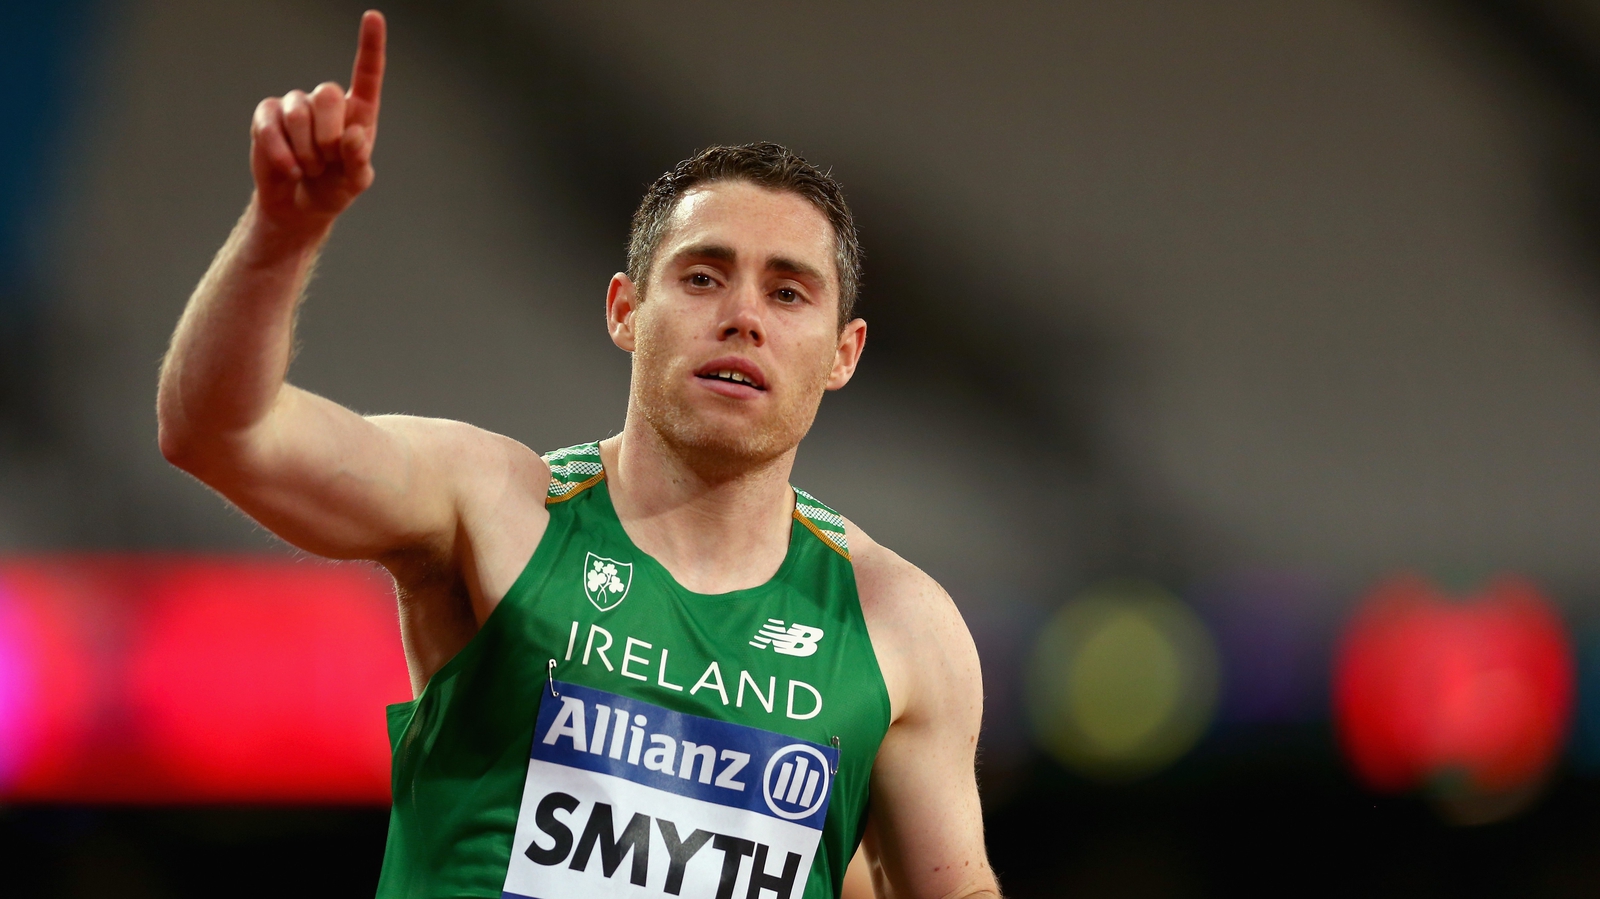 Smyth cruises into 100m final at World Championships